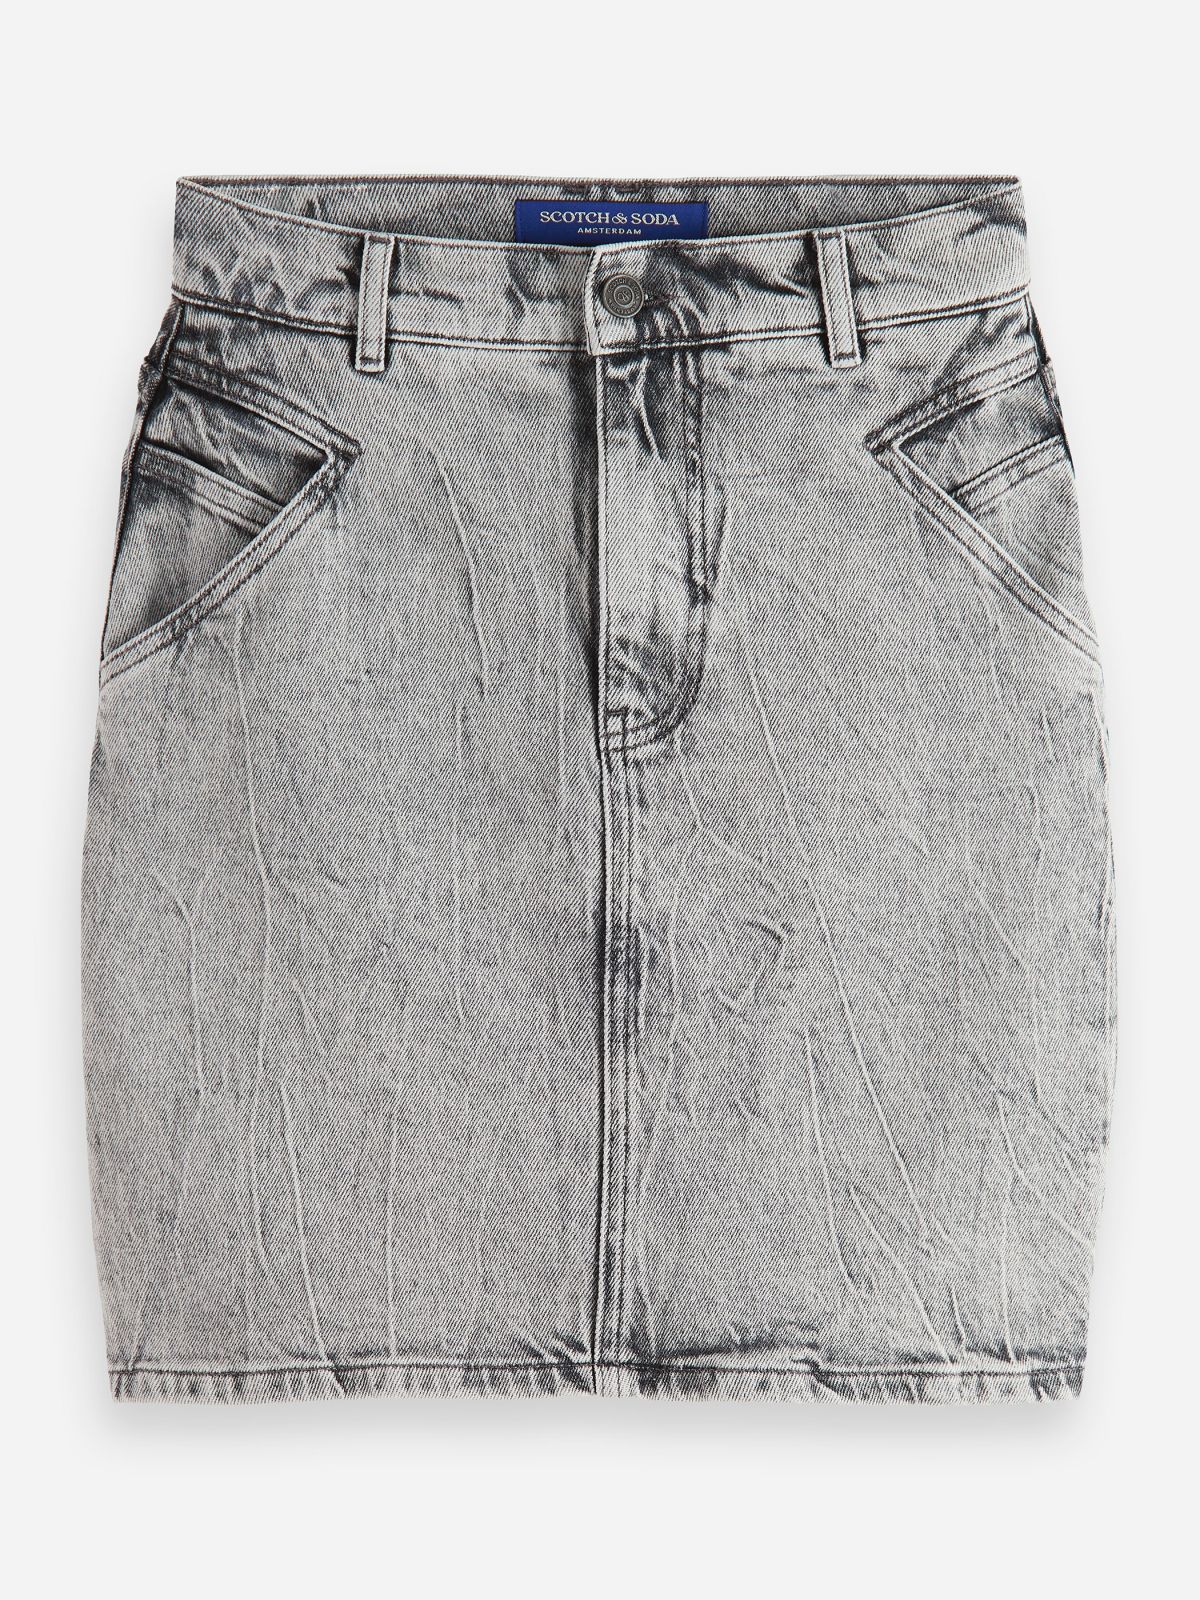  חצאית מיני ג'ינס של SCOTCH & SODA